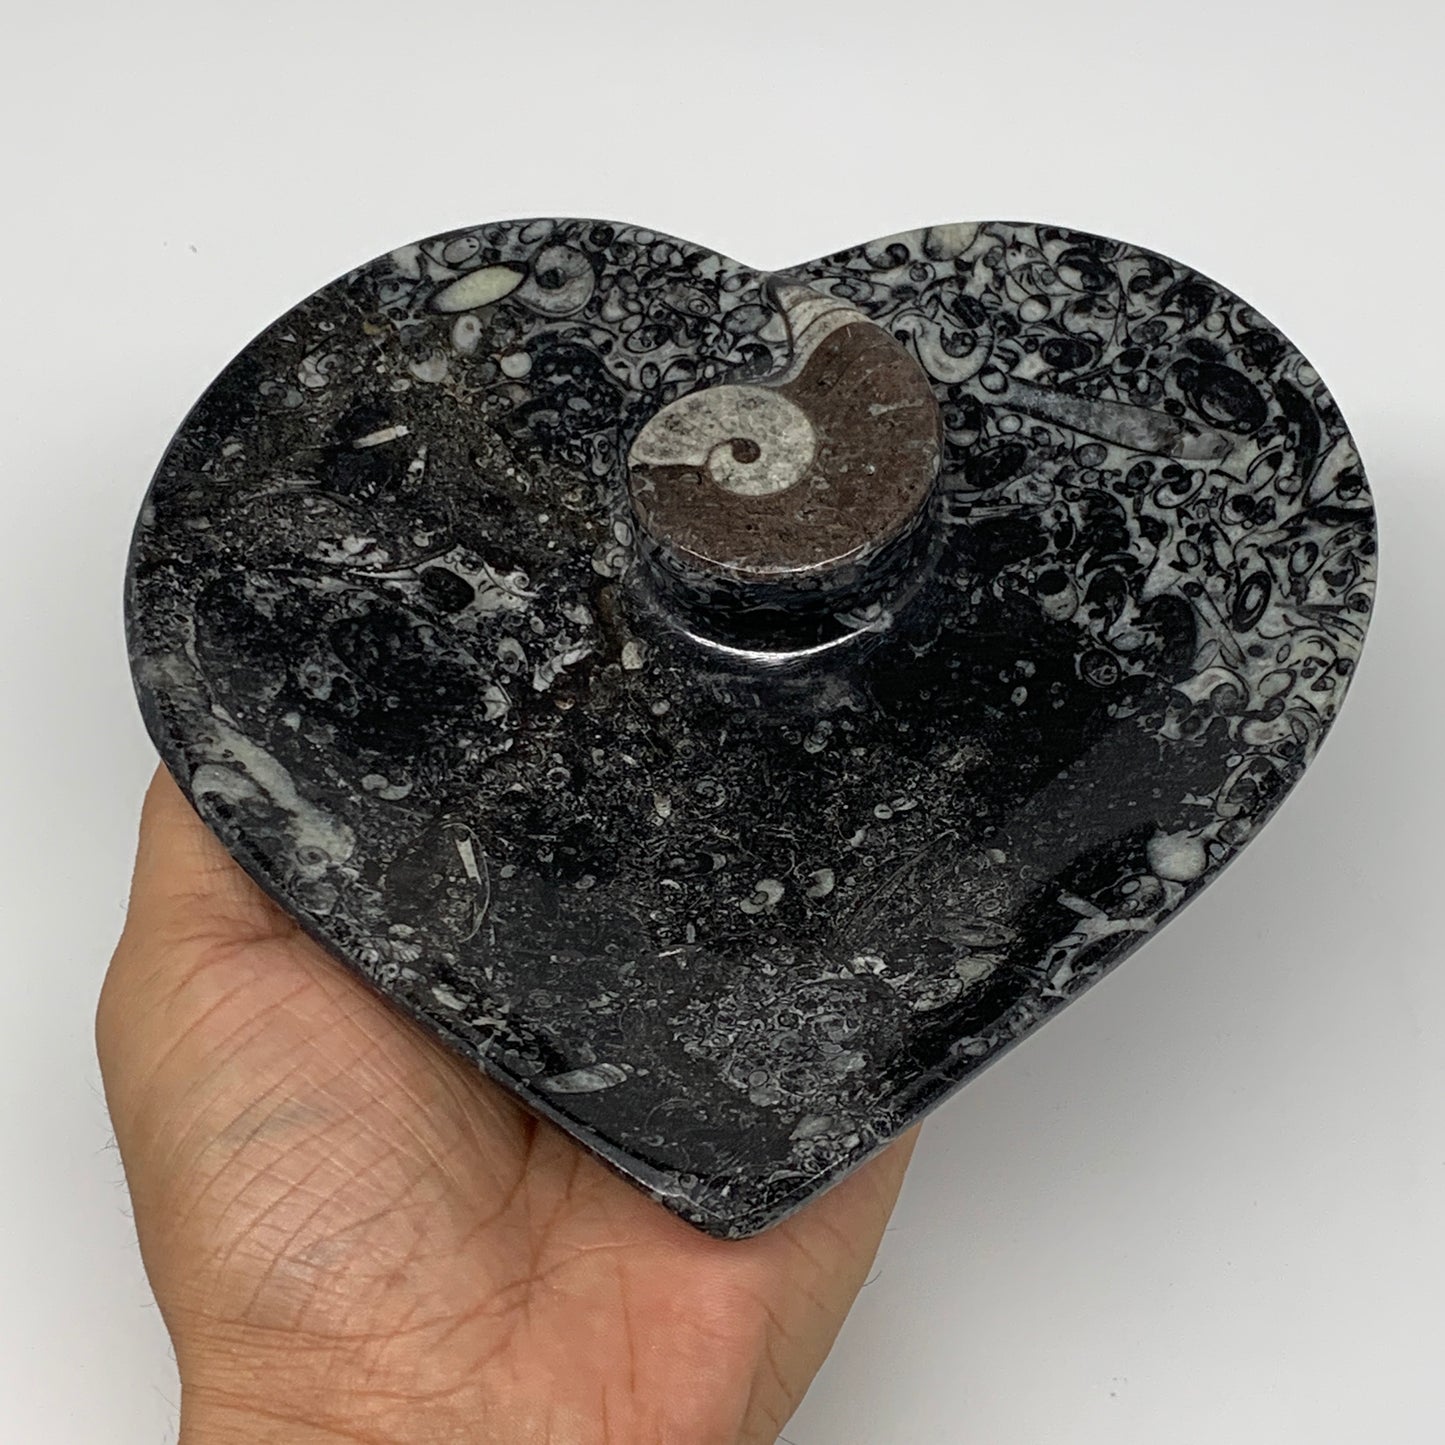 2Pcs, 6.25"x6.25" Heart Fossils Orthoceras Ammonite Bowls @Morocco, B8800